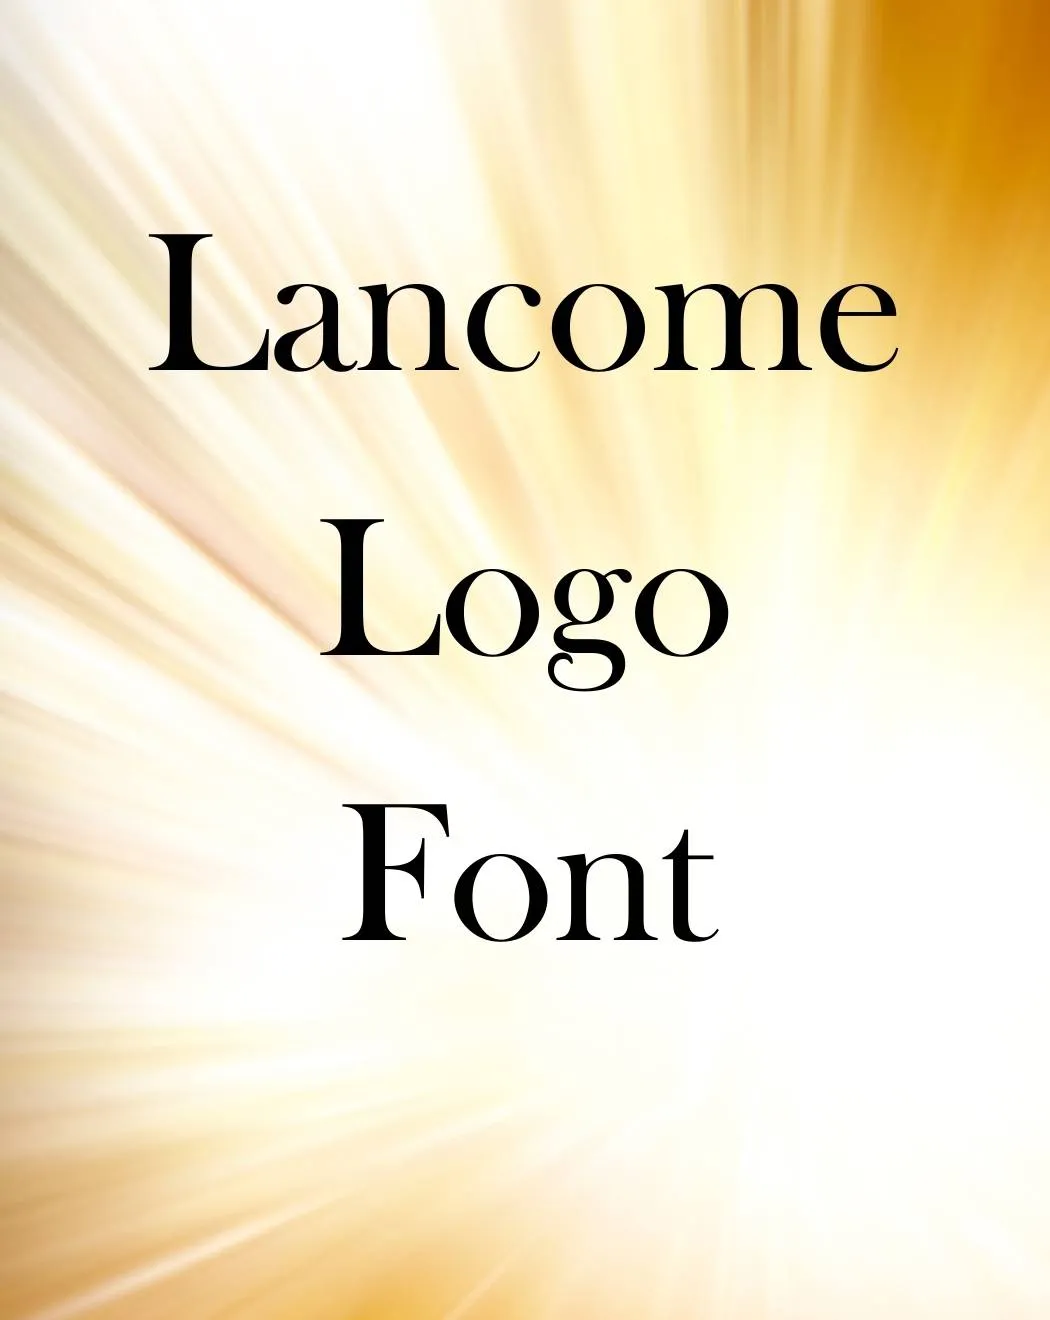 Lancome Logo Font Free Download